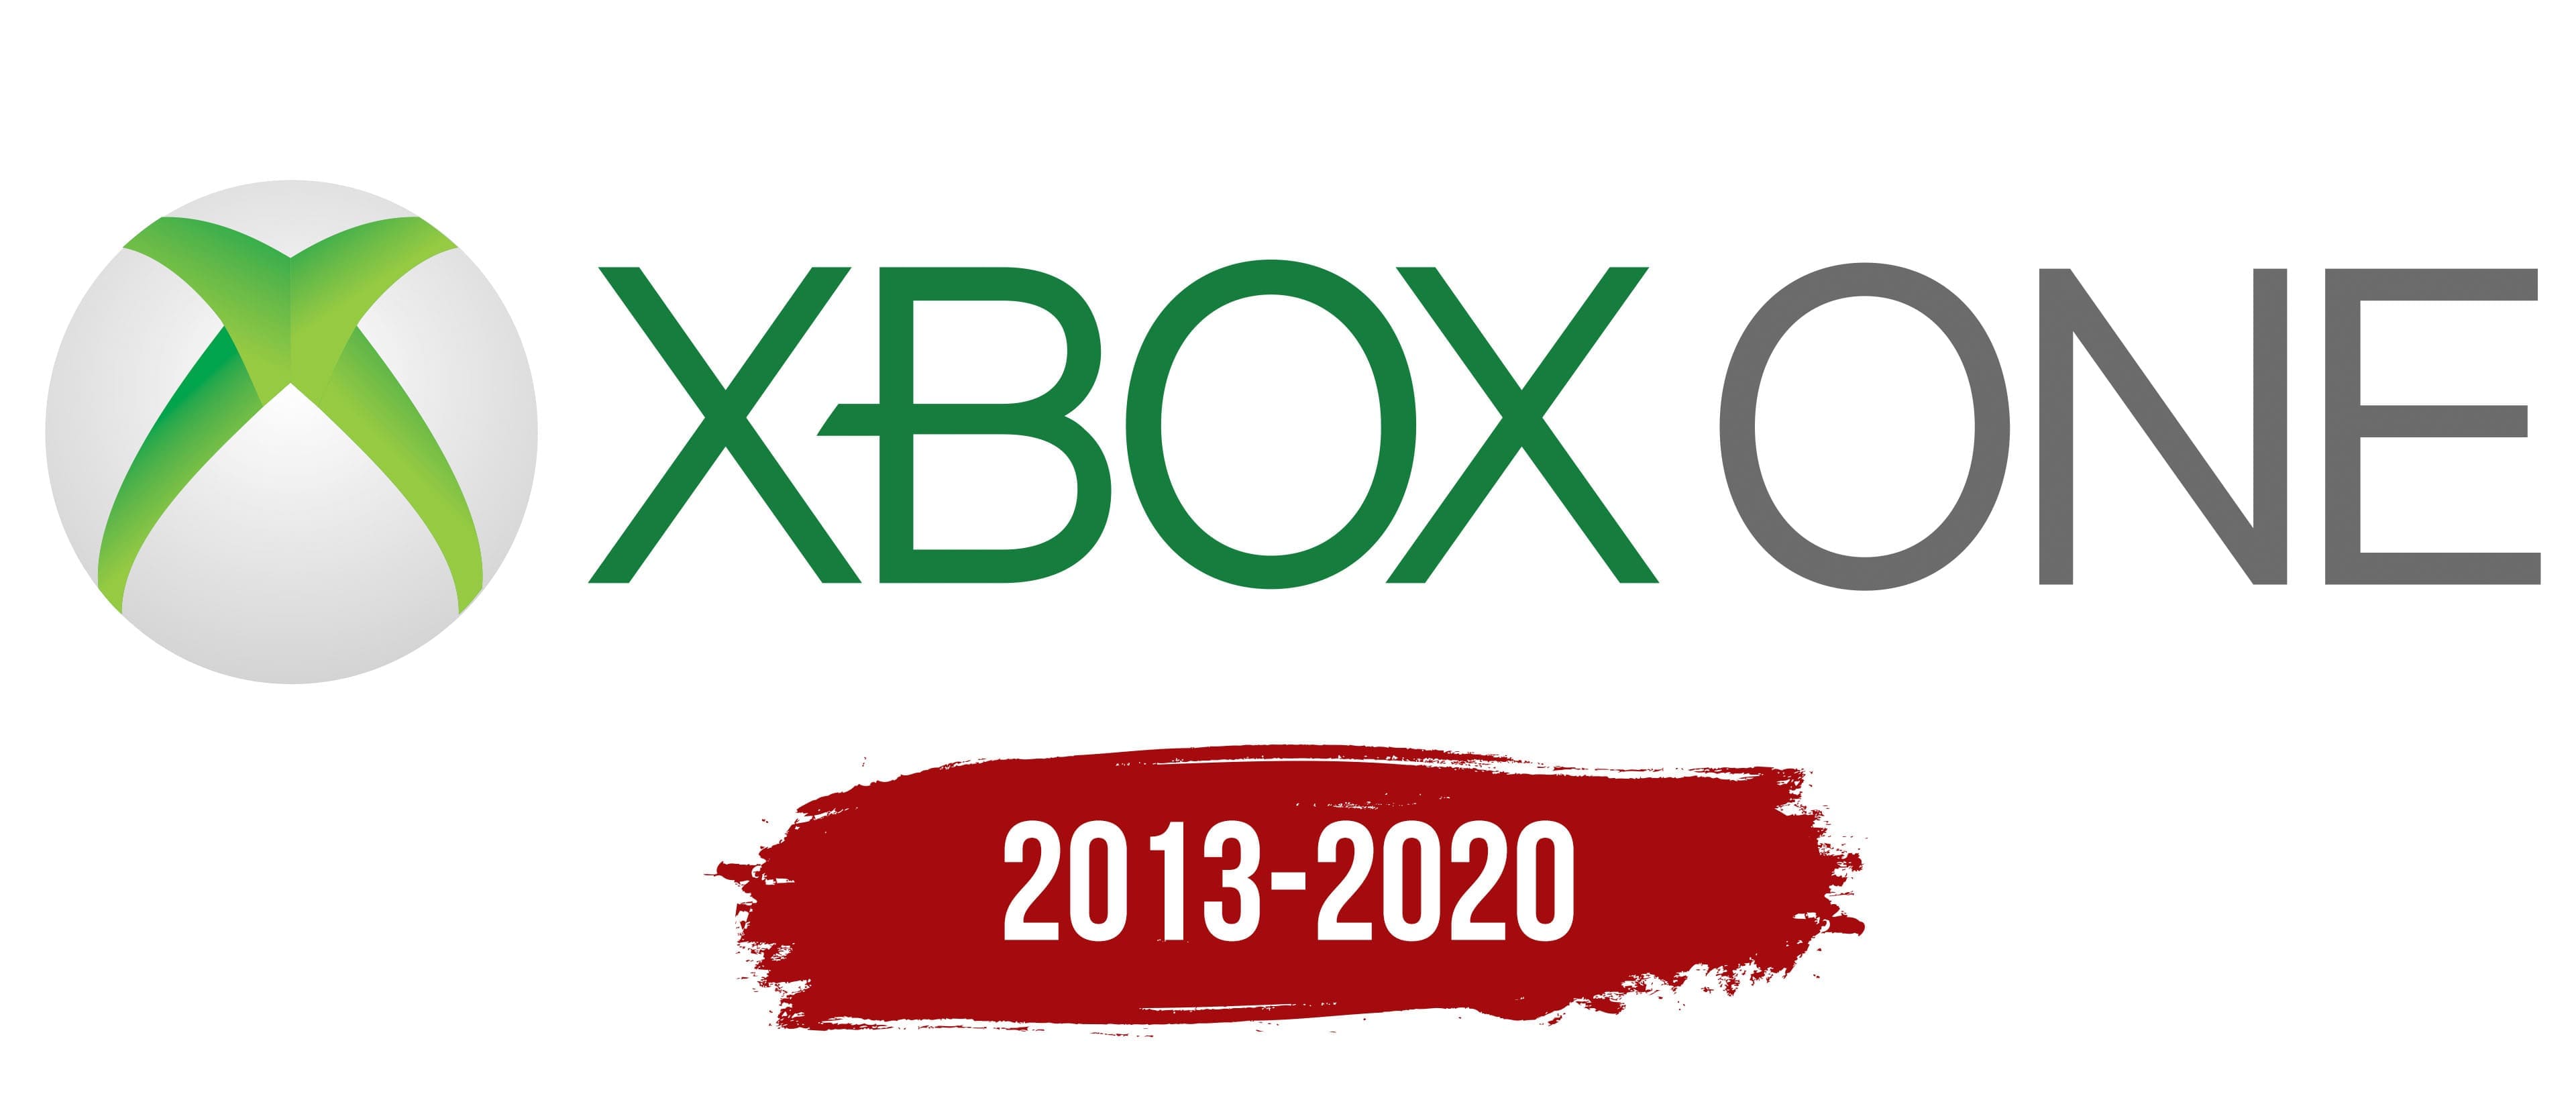 Discipline vangst variabel Xbox One Logo, symbol, meaning, history, PNG, brand